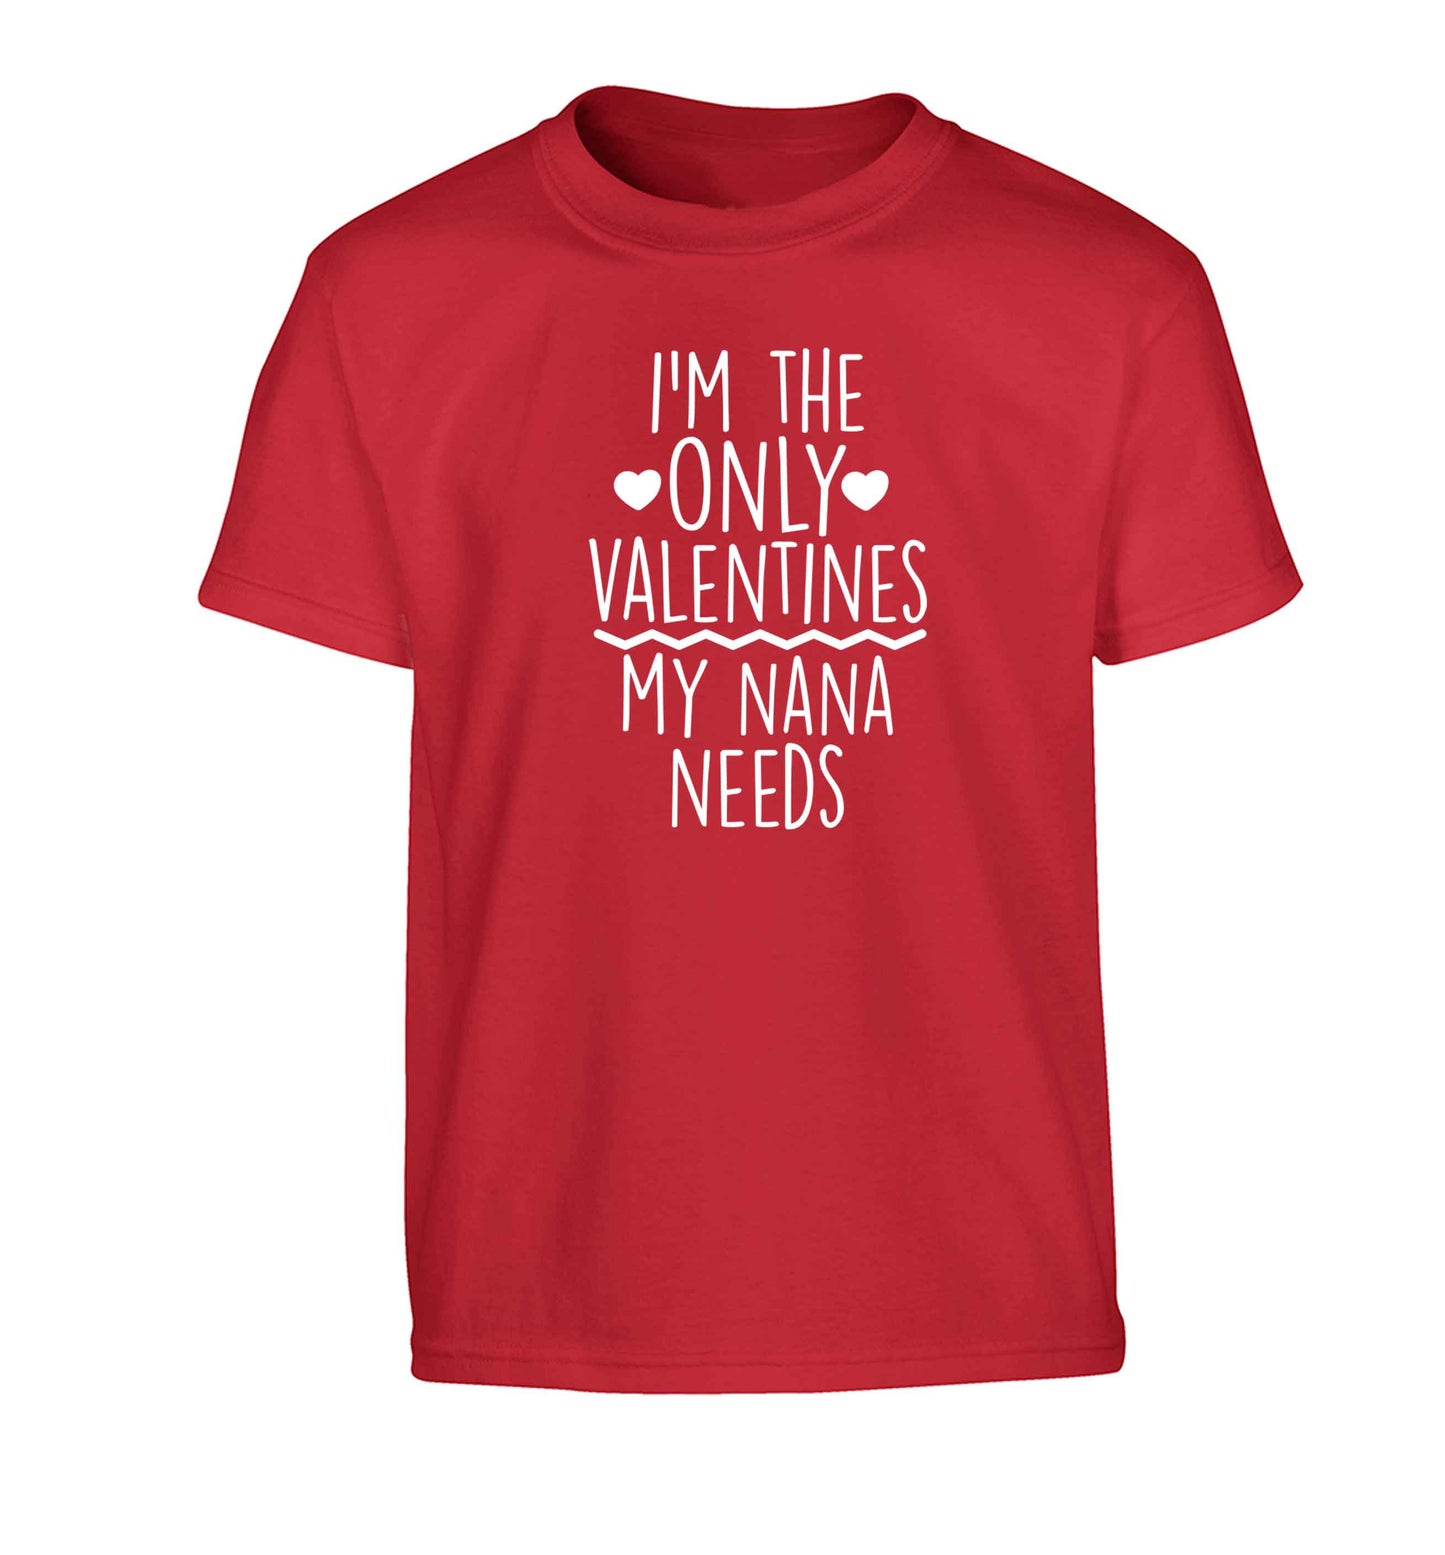 I'm the only valentines my nana needs Children's red Tshirt 12-13 Years